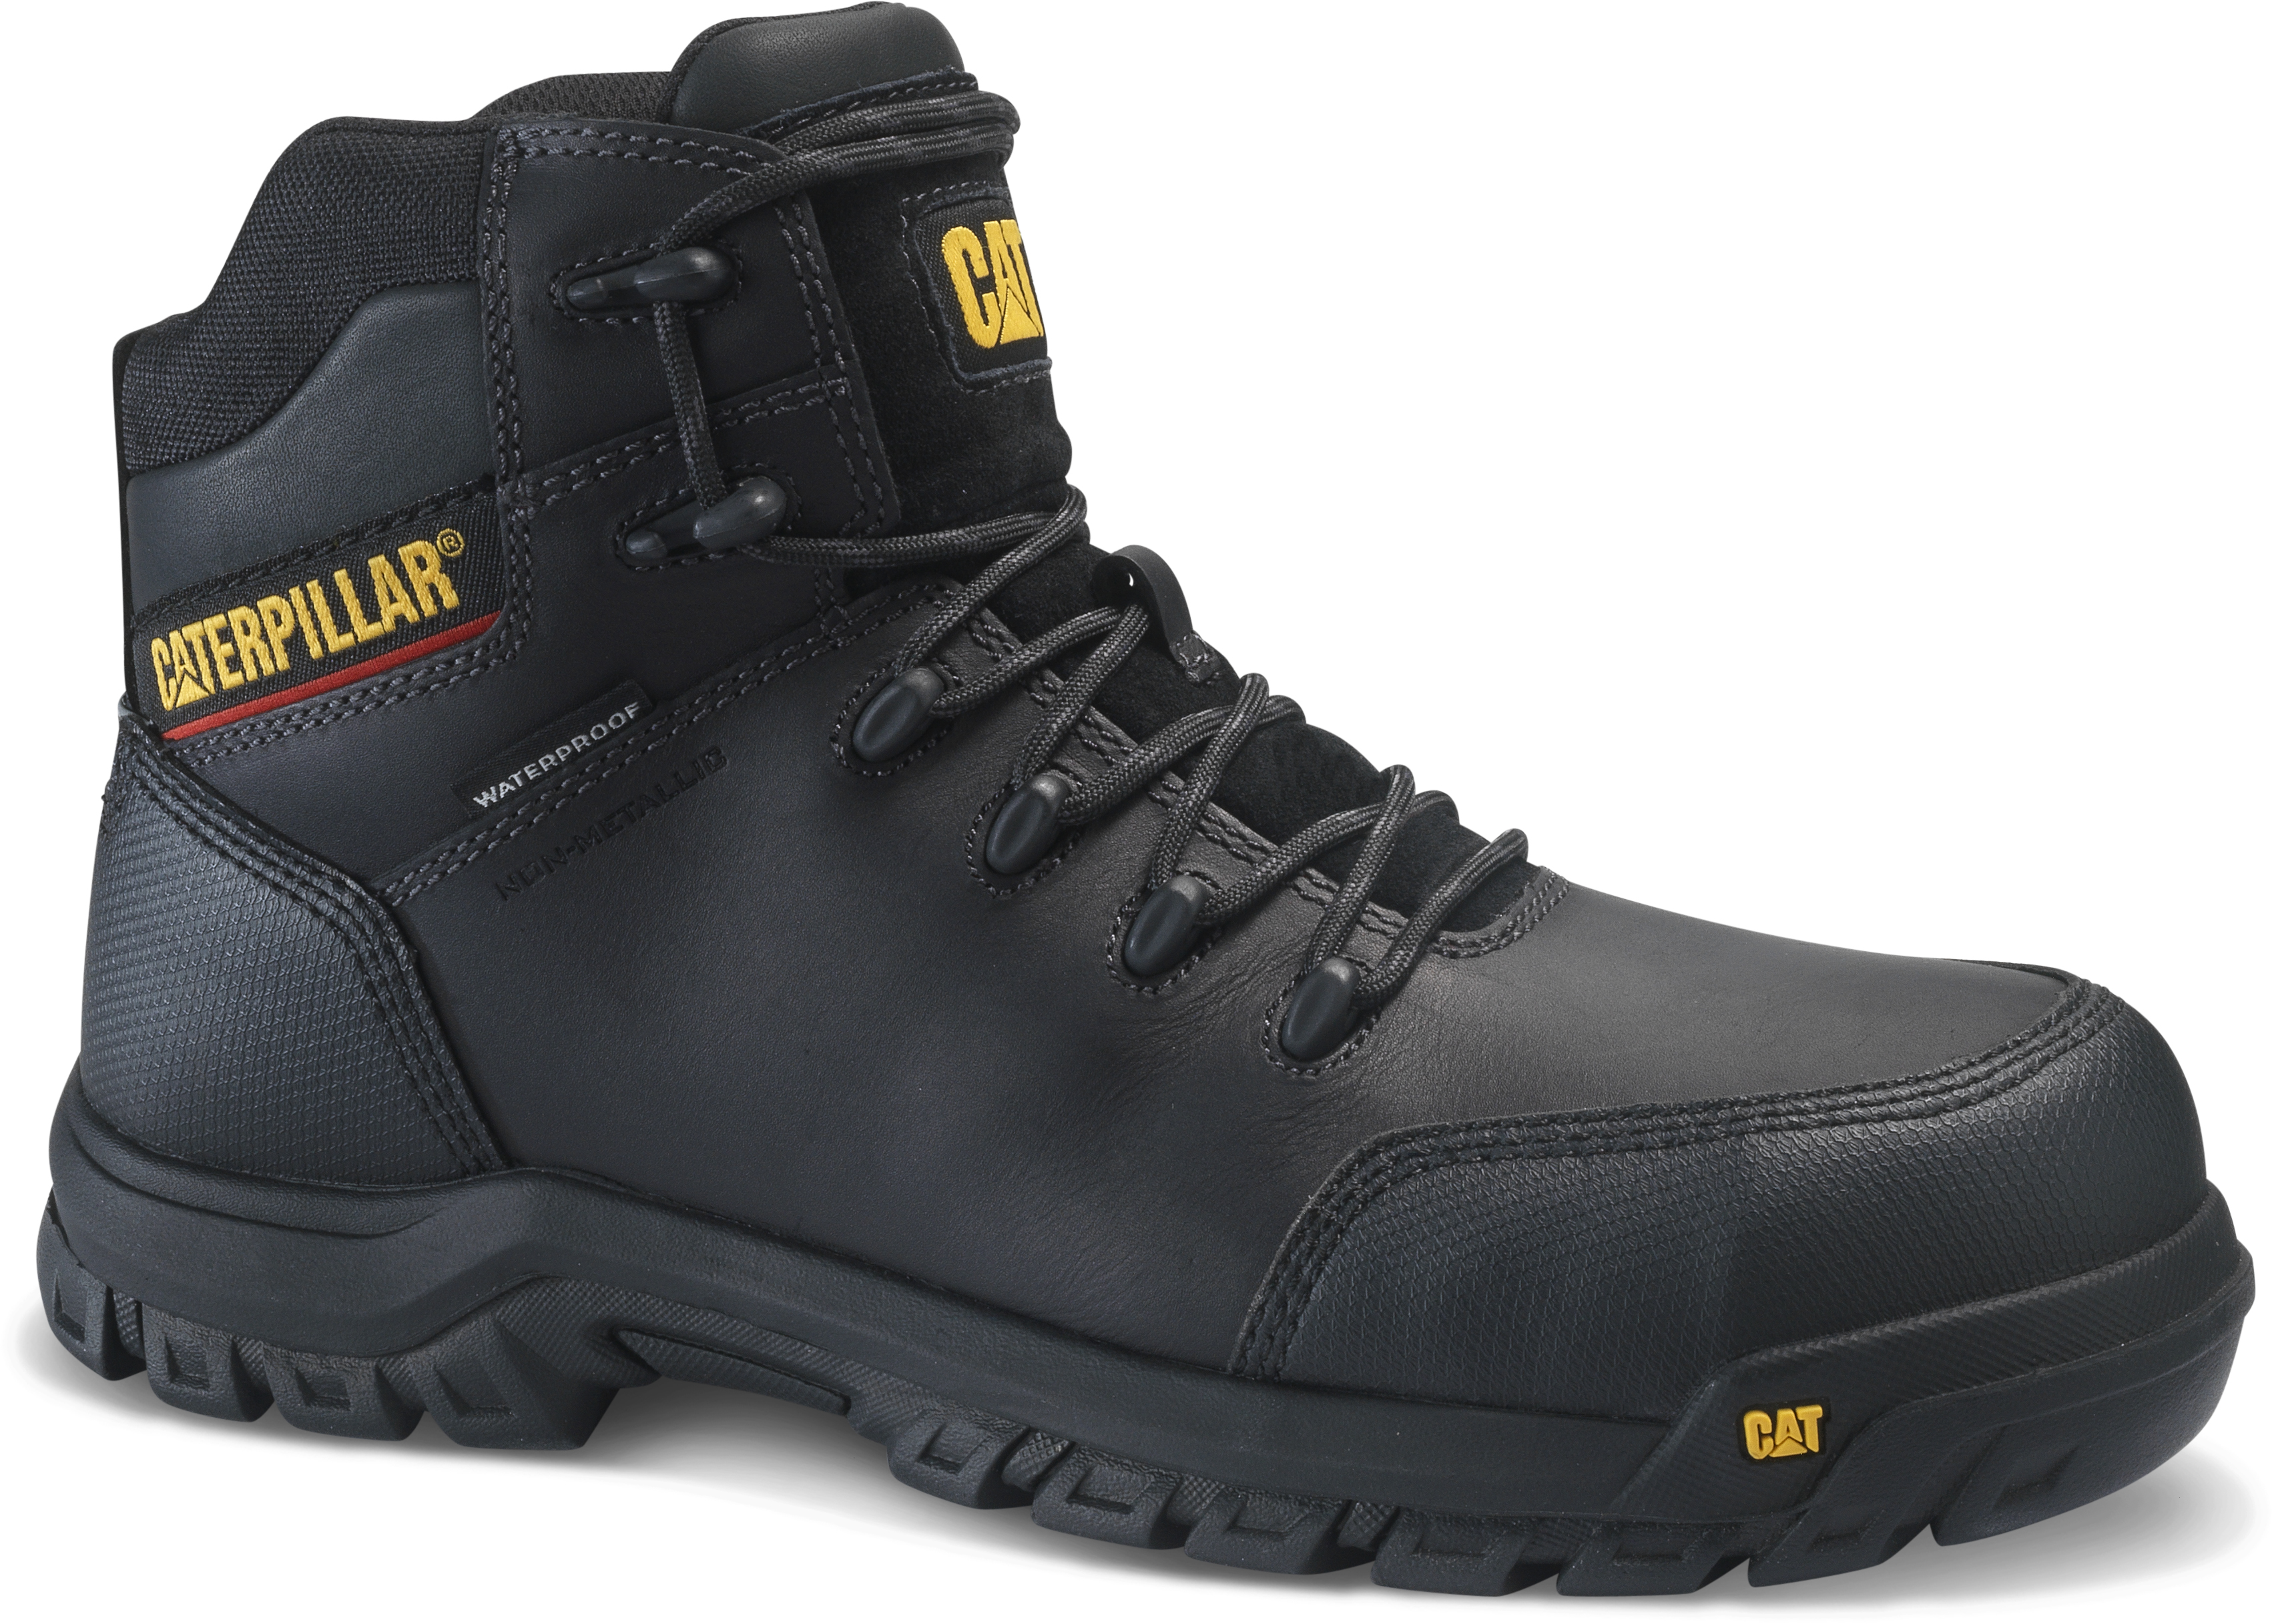 Cat Footwear Men's Resorption 6" Black Waterproof Composite Toe Boot - Wide Width Available